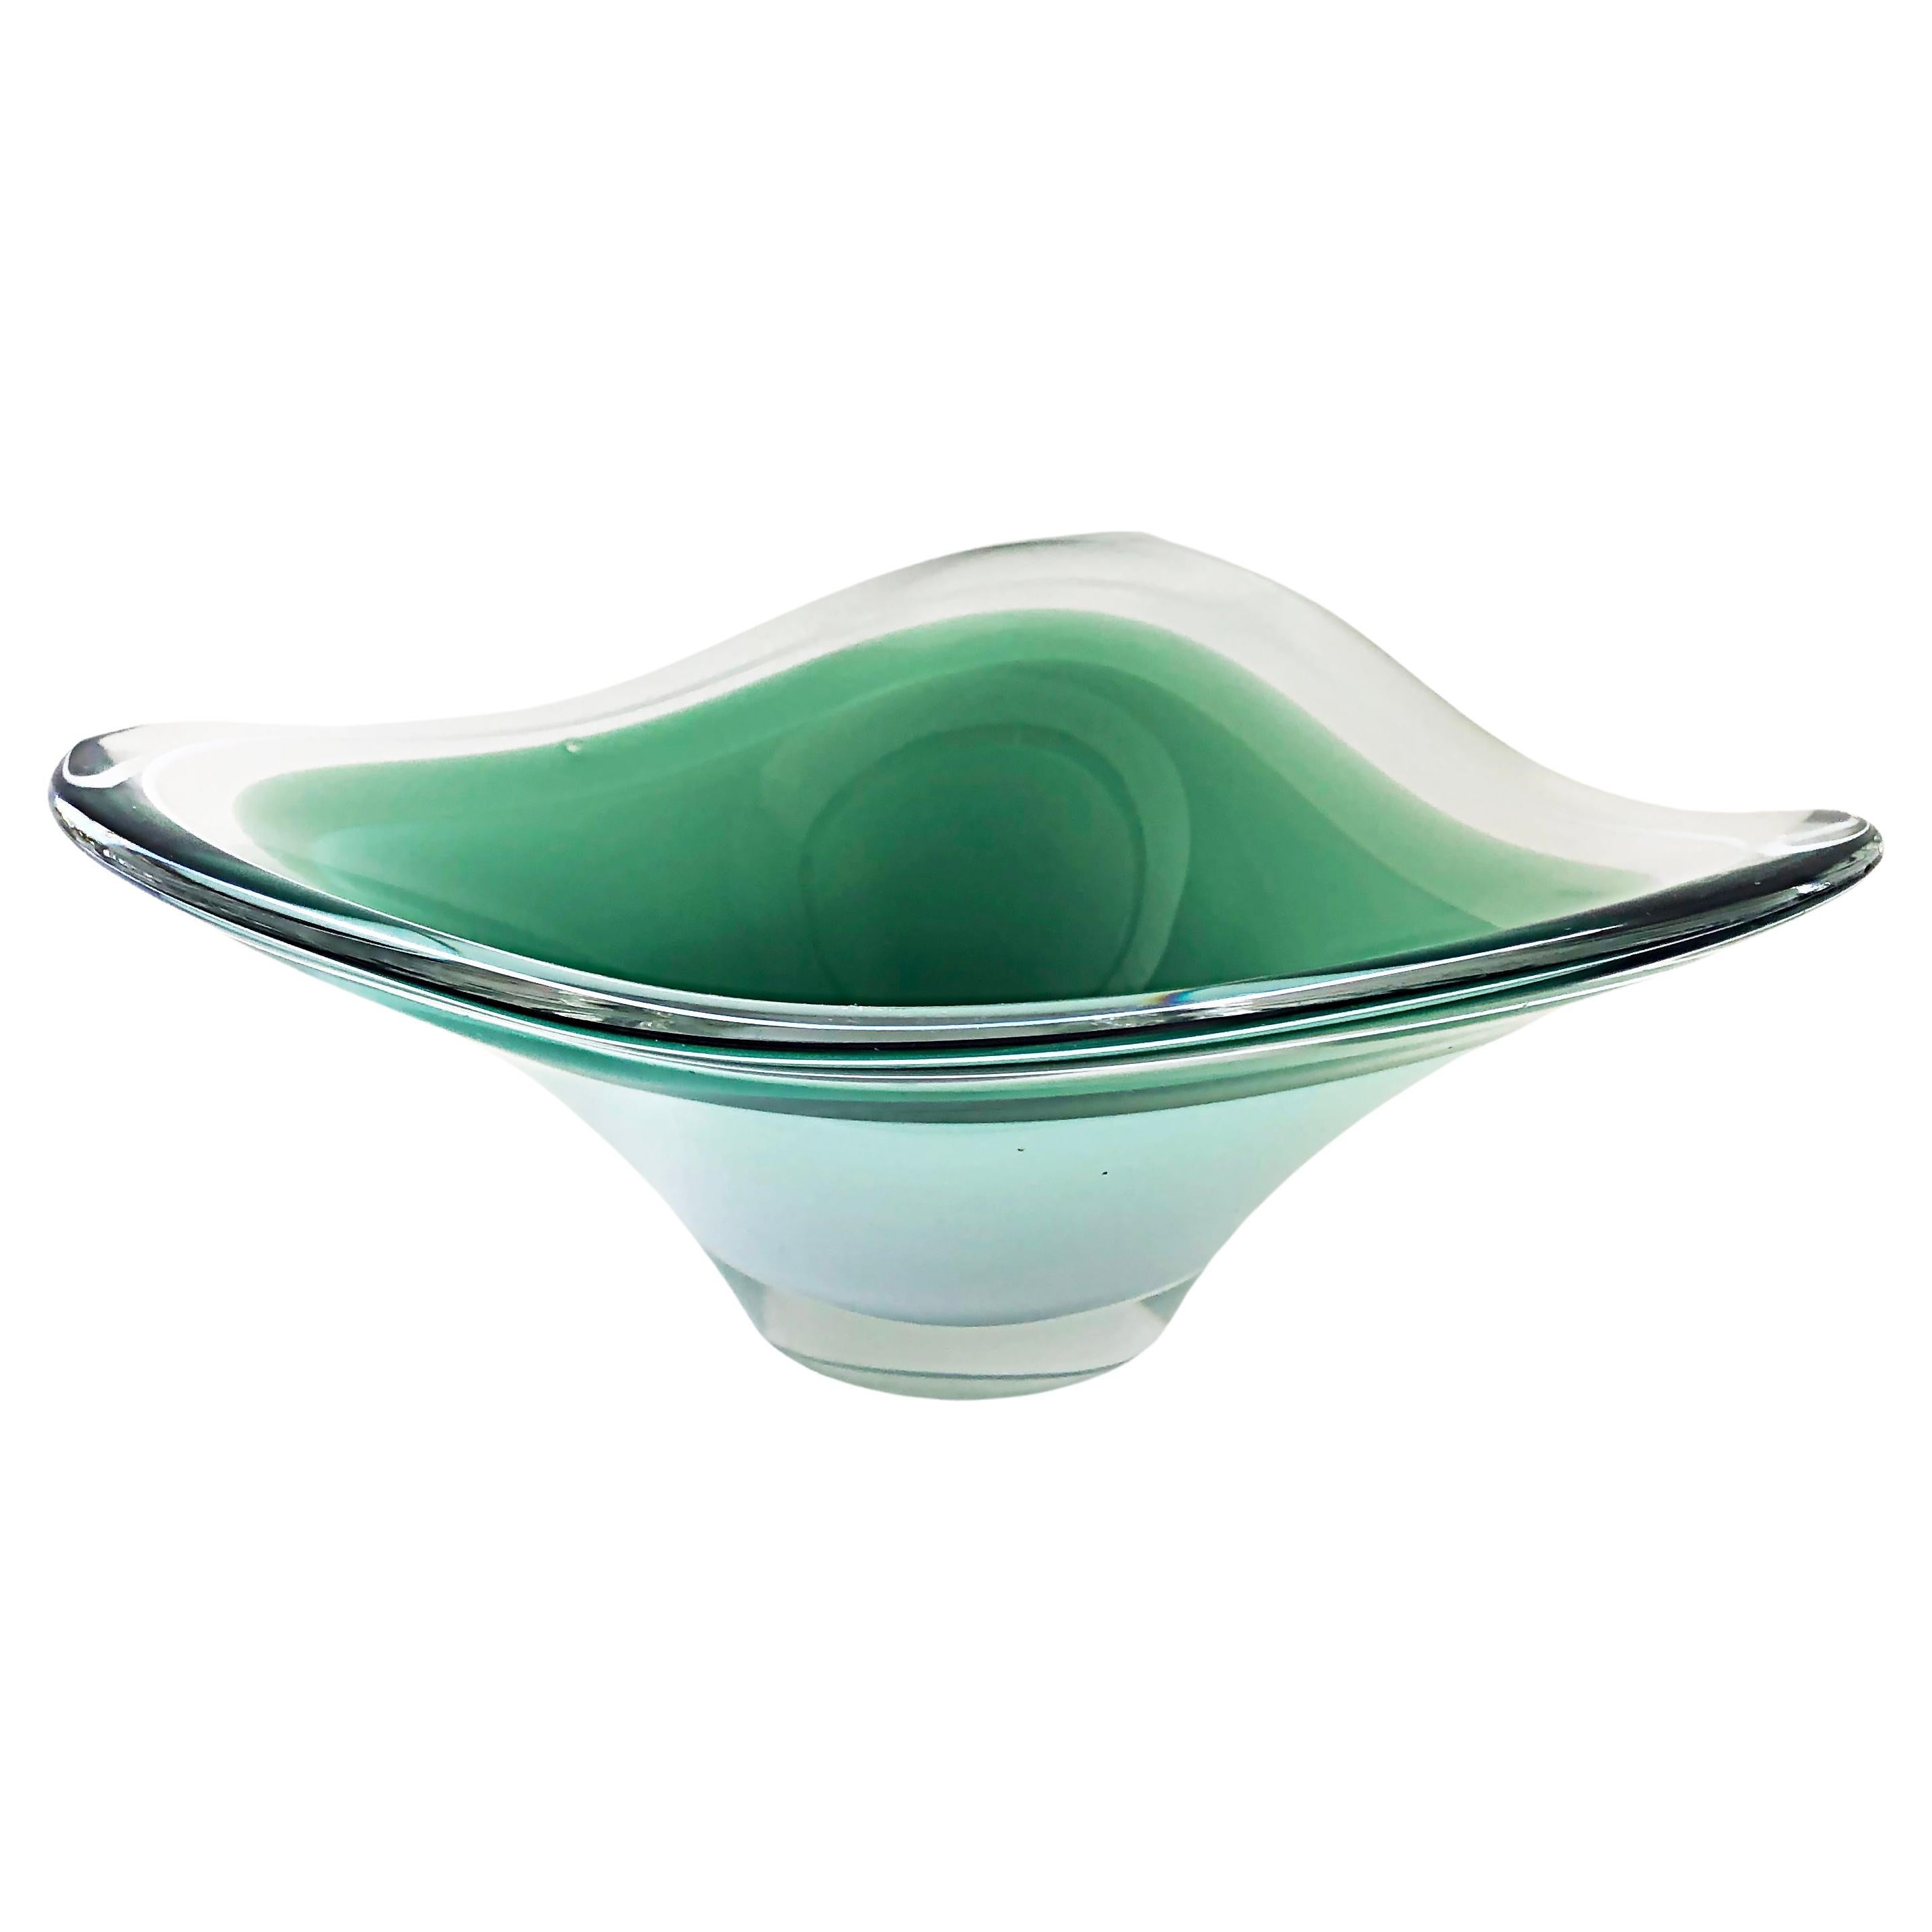 Paul Kedelv for Flygsfor Sweden "Coquille" Glass Bowl, Scandinavian Modern